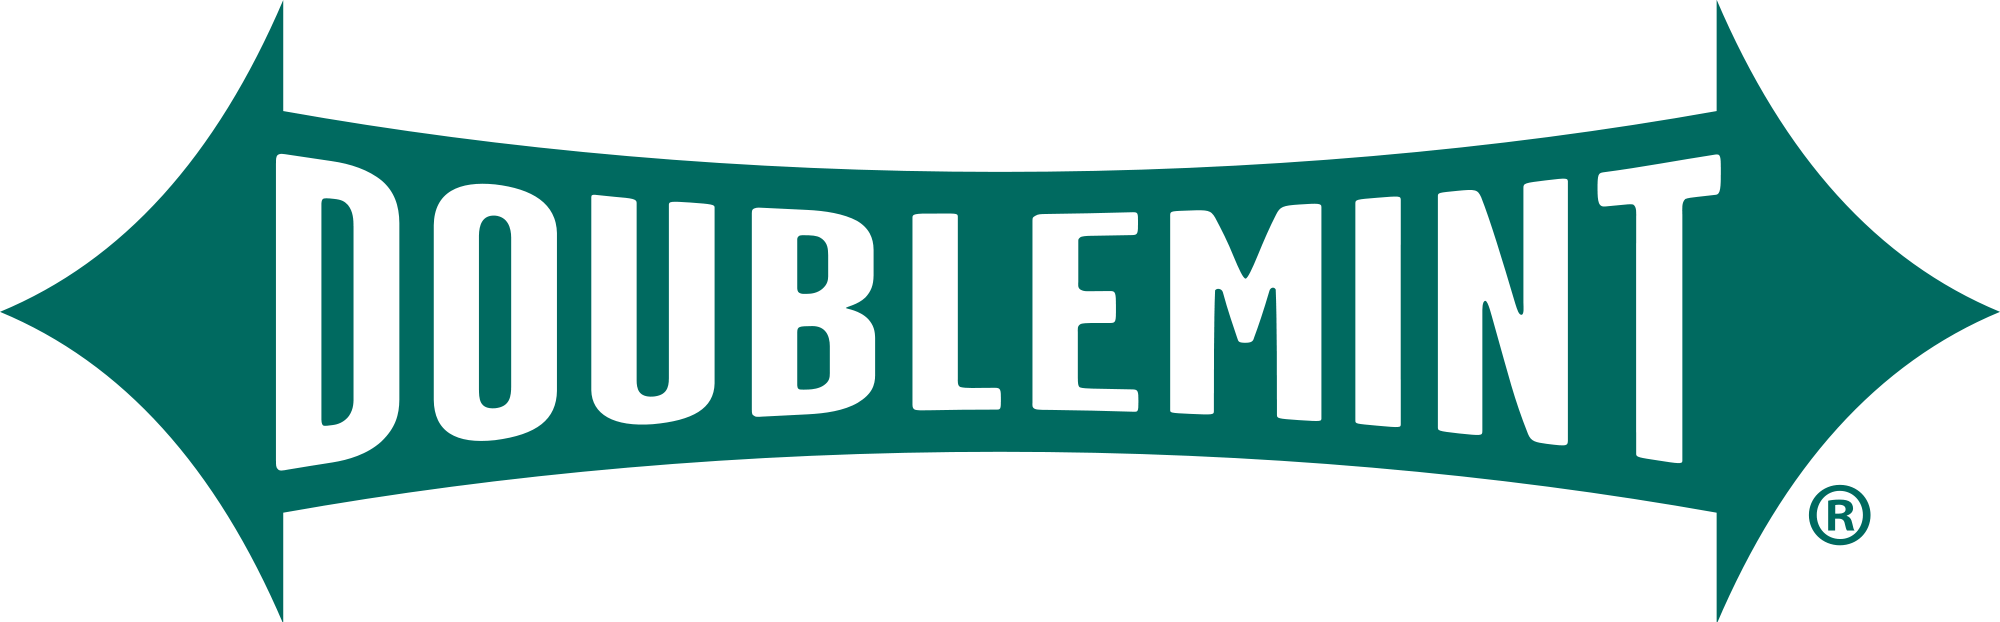 Gum Logo - Doublemint logo.svg